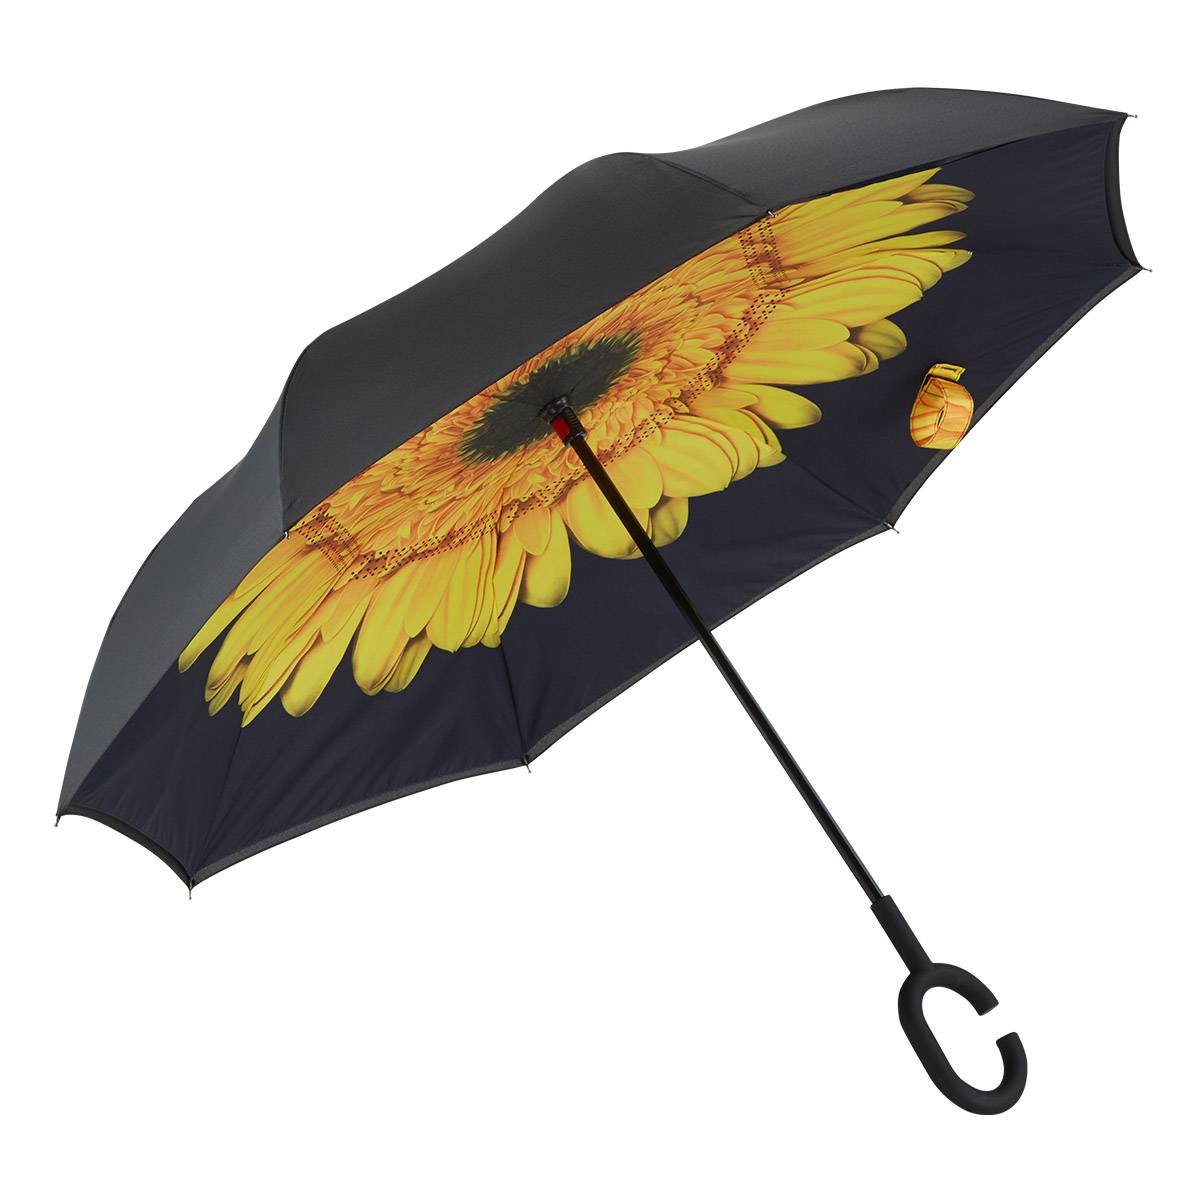 Hânlieding Iepen C Hook Handle Double Layer Reverse Umbrella